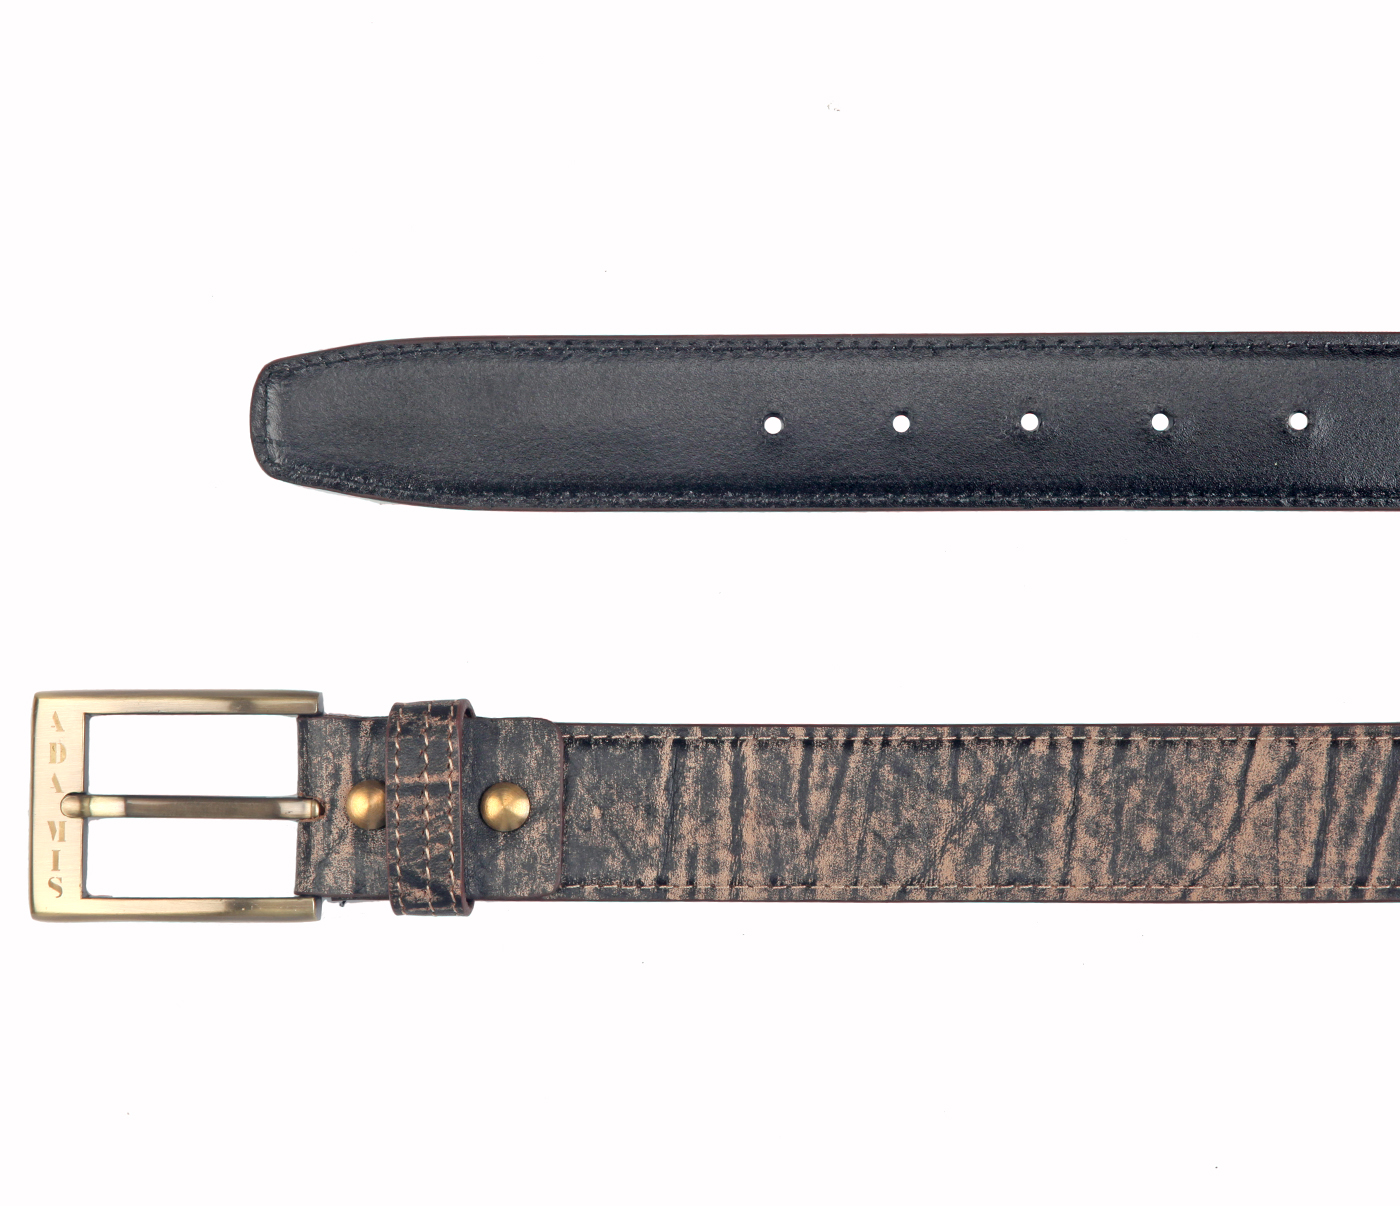 BL167--Men's stylish Casual wear belt in Genuine Leather - Brown.